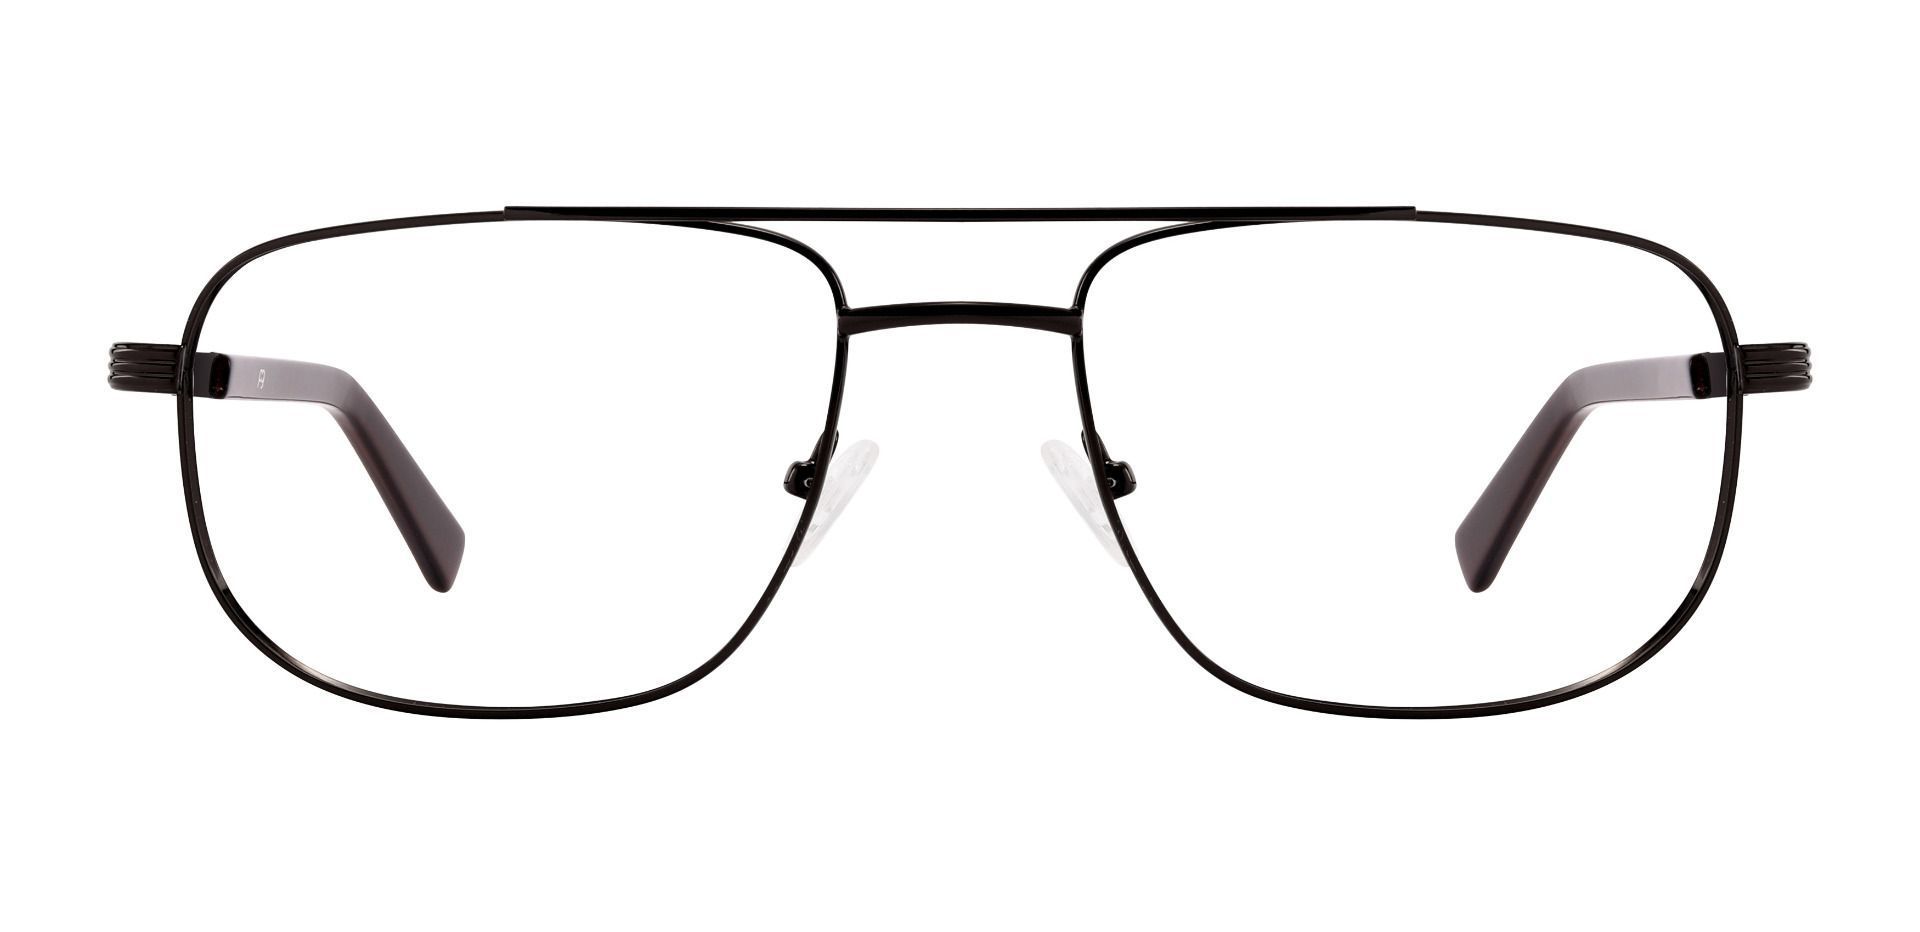 Drayton Aviator Prescription Glasses - Black